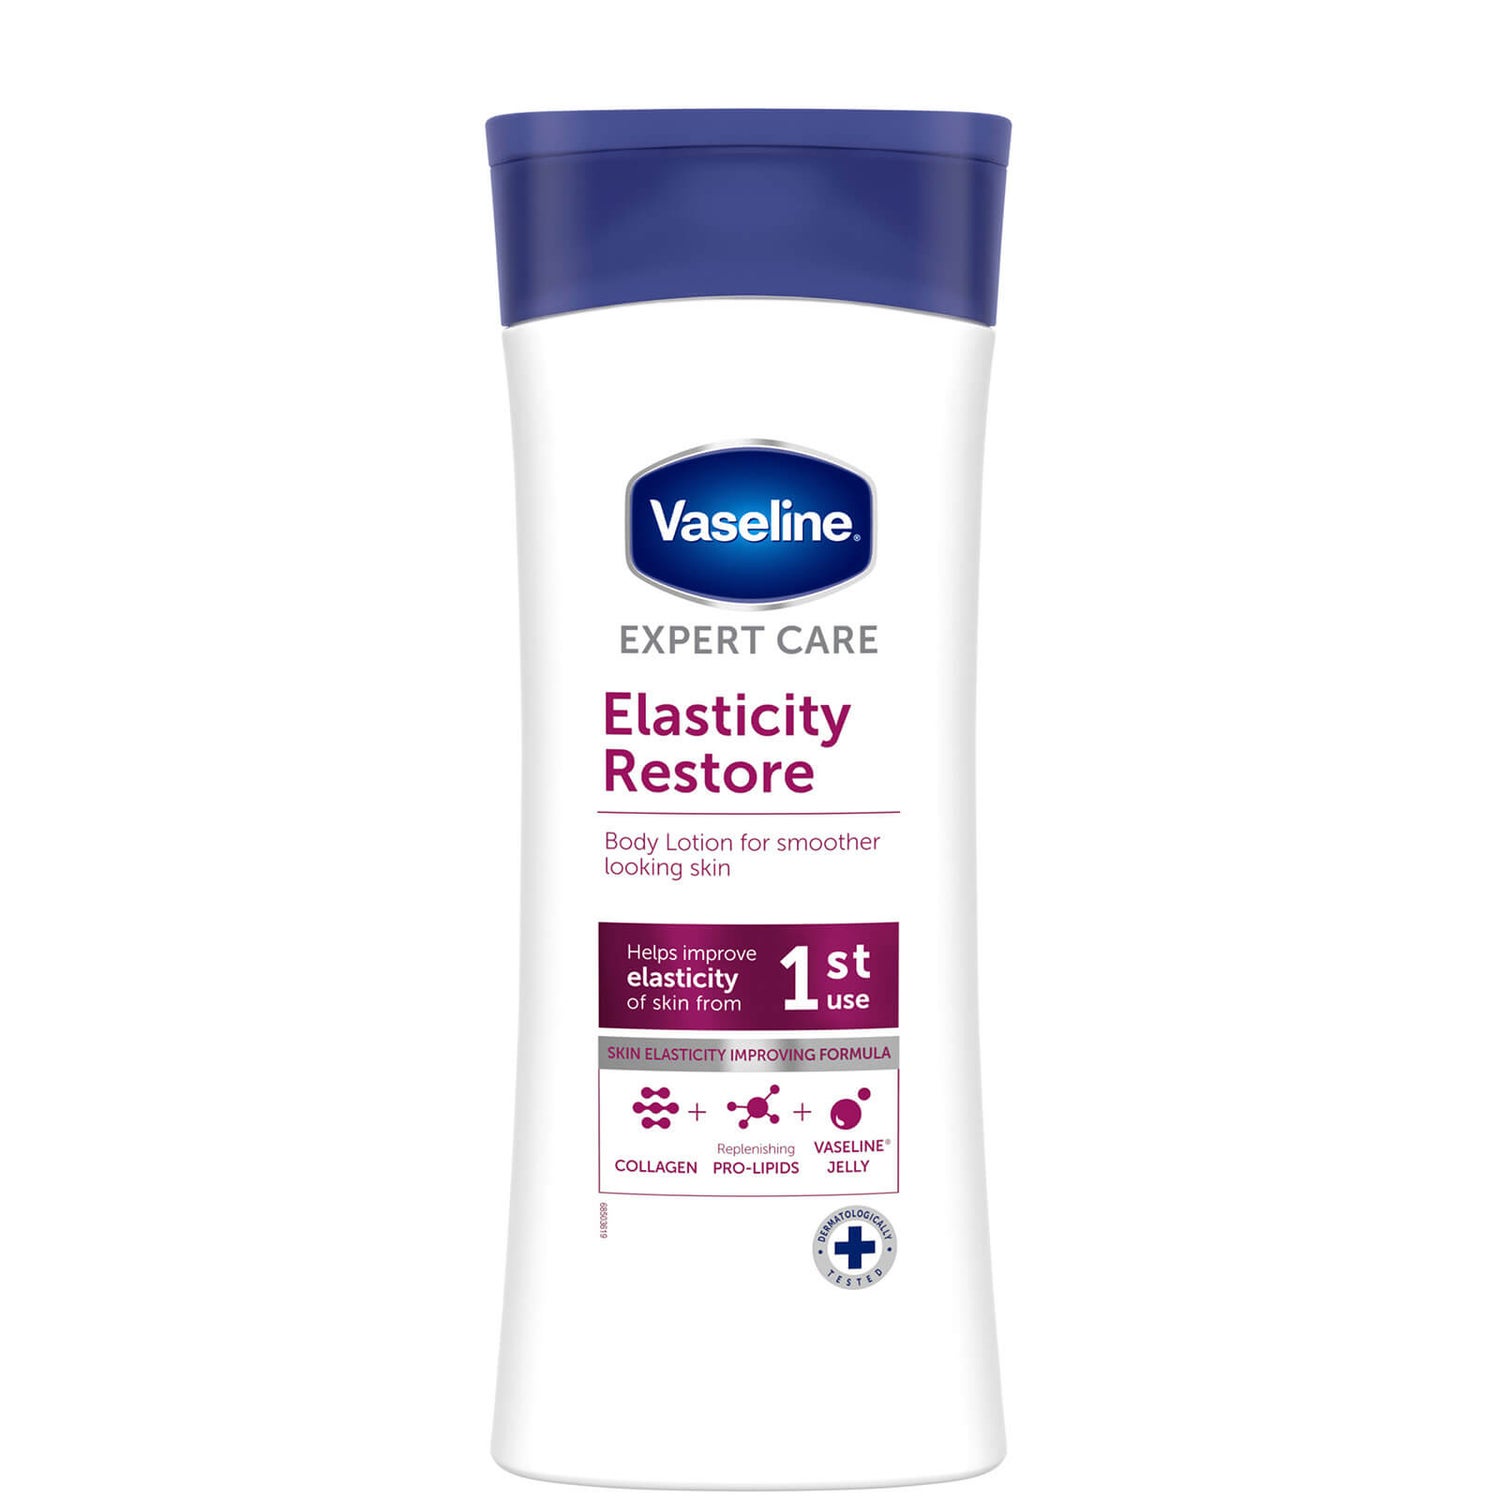 Vaseline Expert Care Elasticity Restore Body Lotion